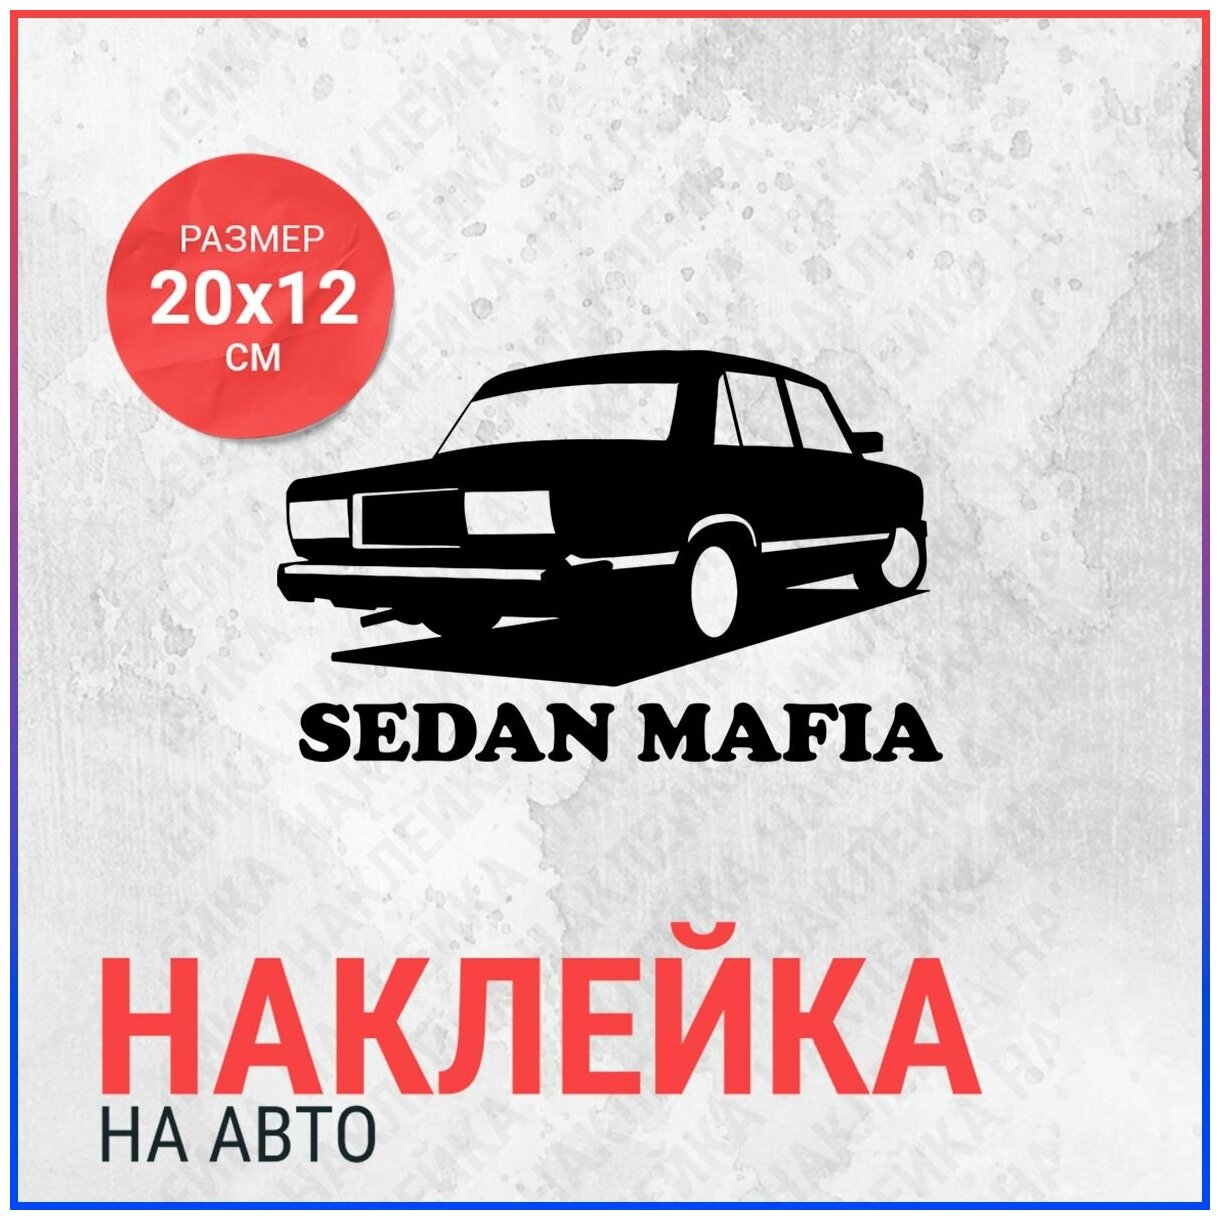 Наклейка на авто 20х12 Sedan mafia